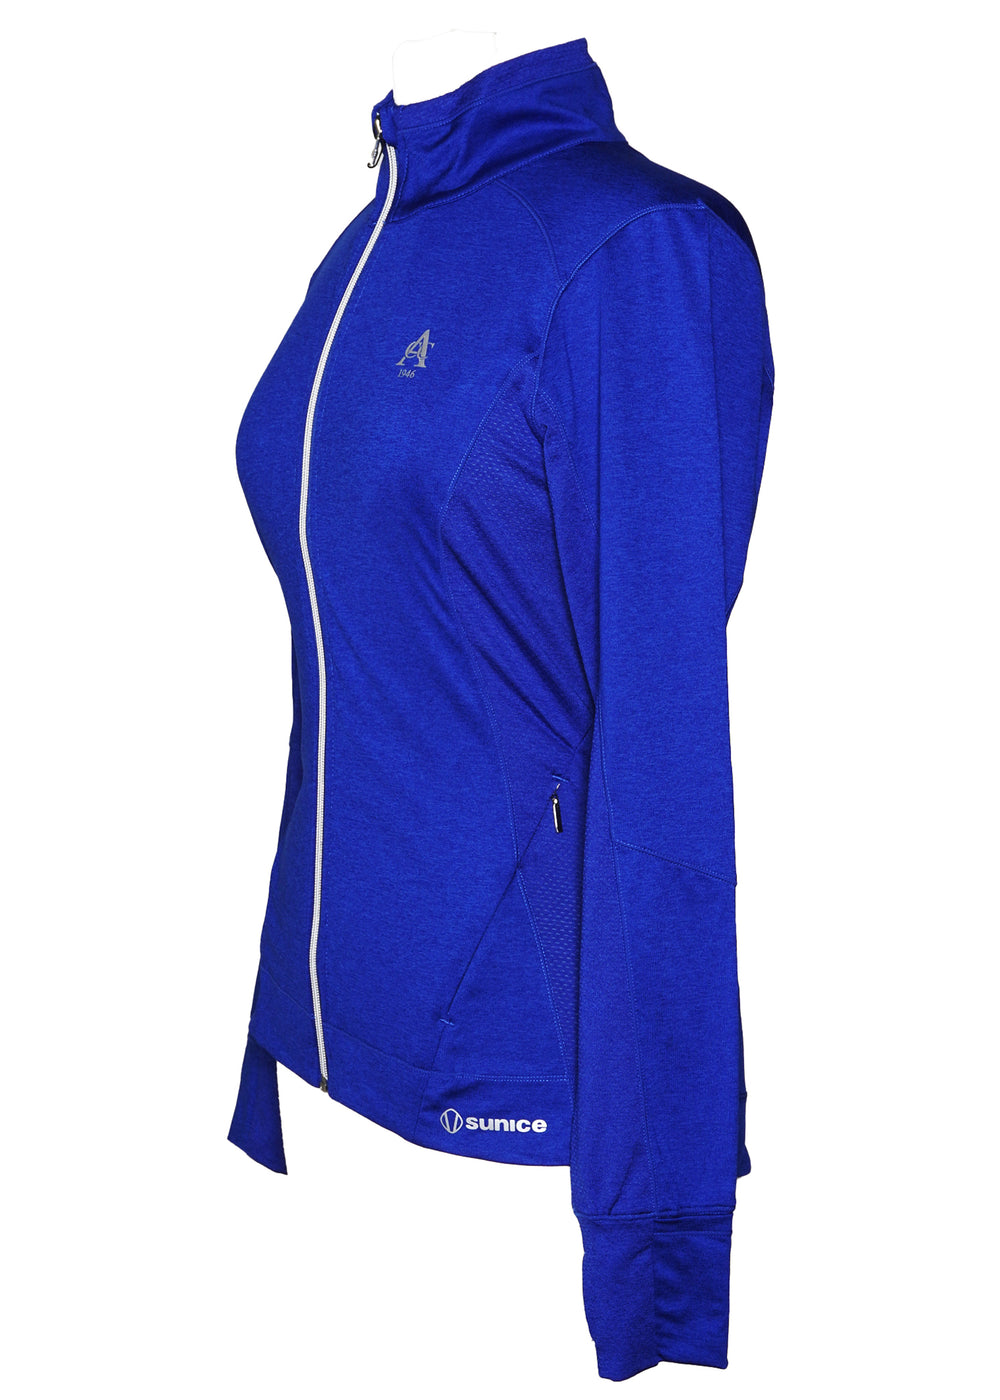 Sunice Elena Layers Jacket - Blue Stone - size Small - Skorzie